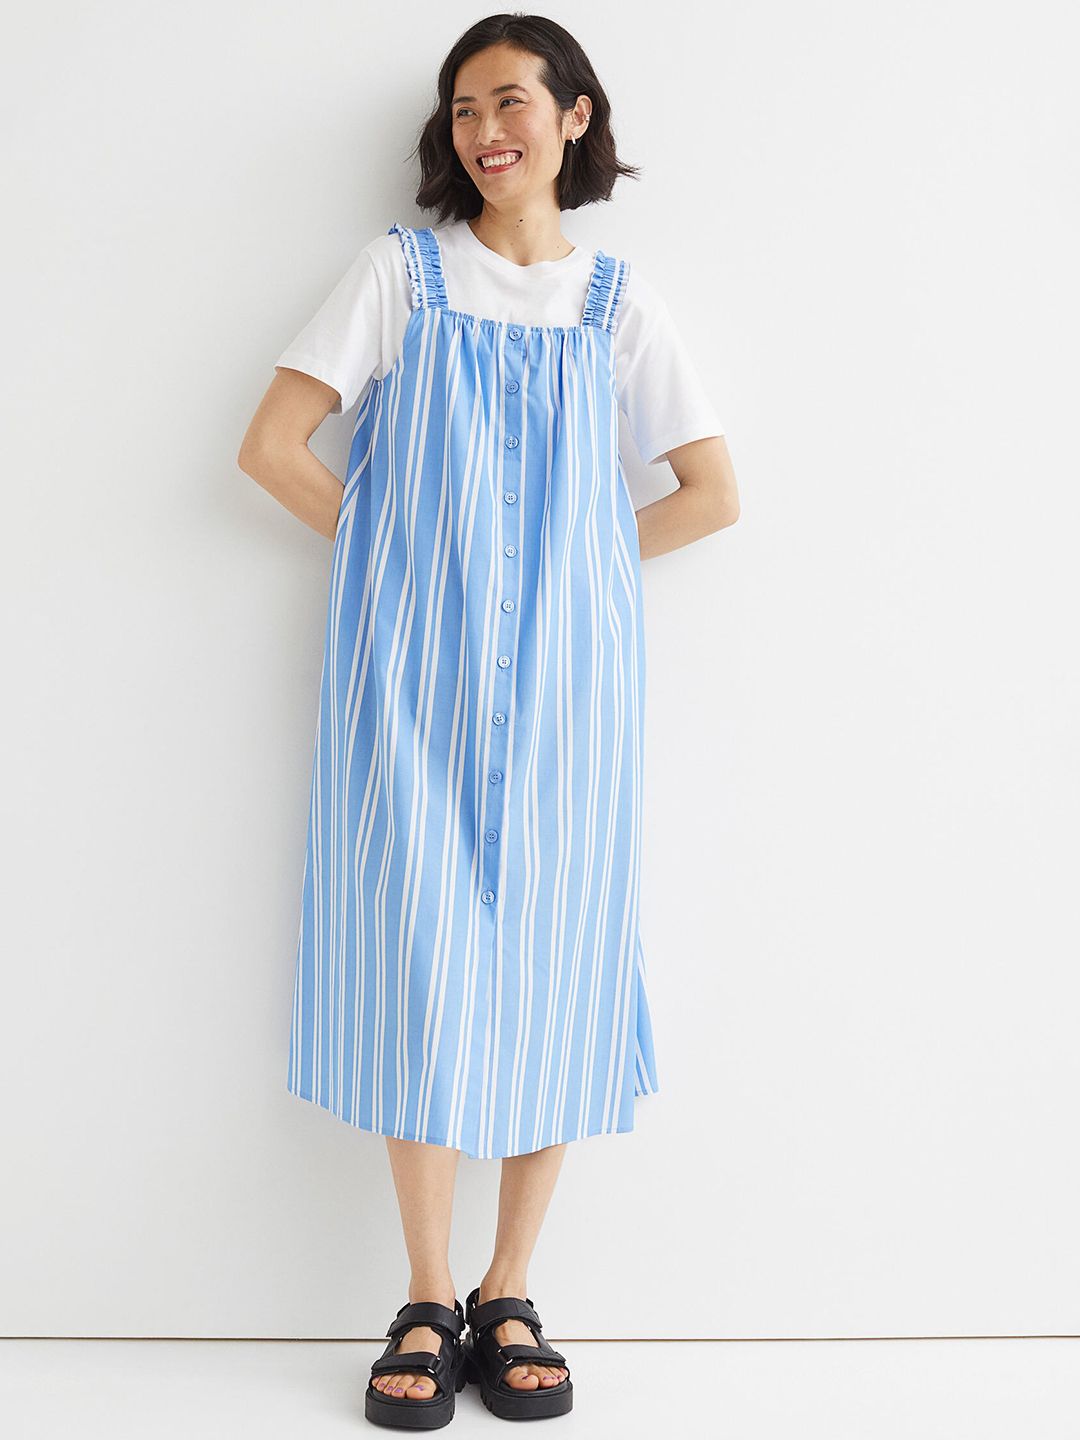 H&M Women Blue & White Striped Cotton A-Line Dress Price in India